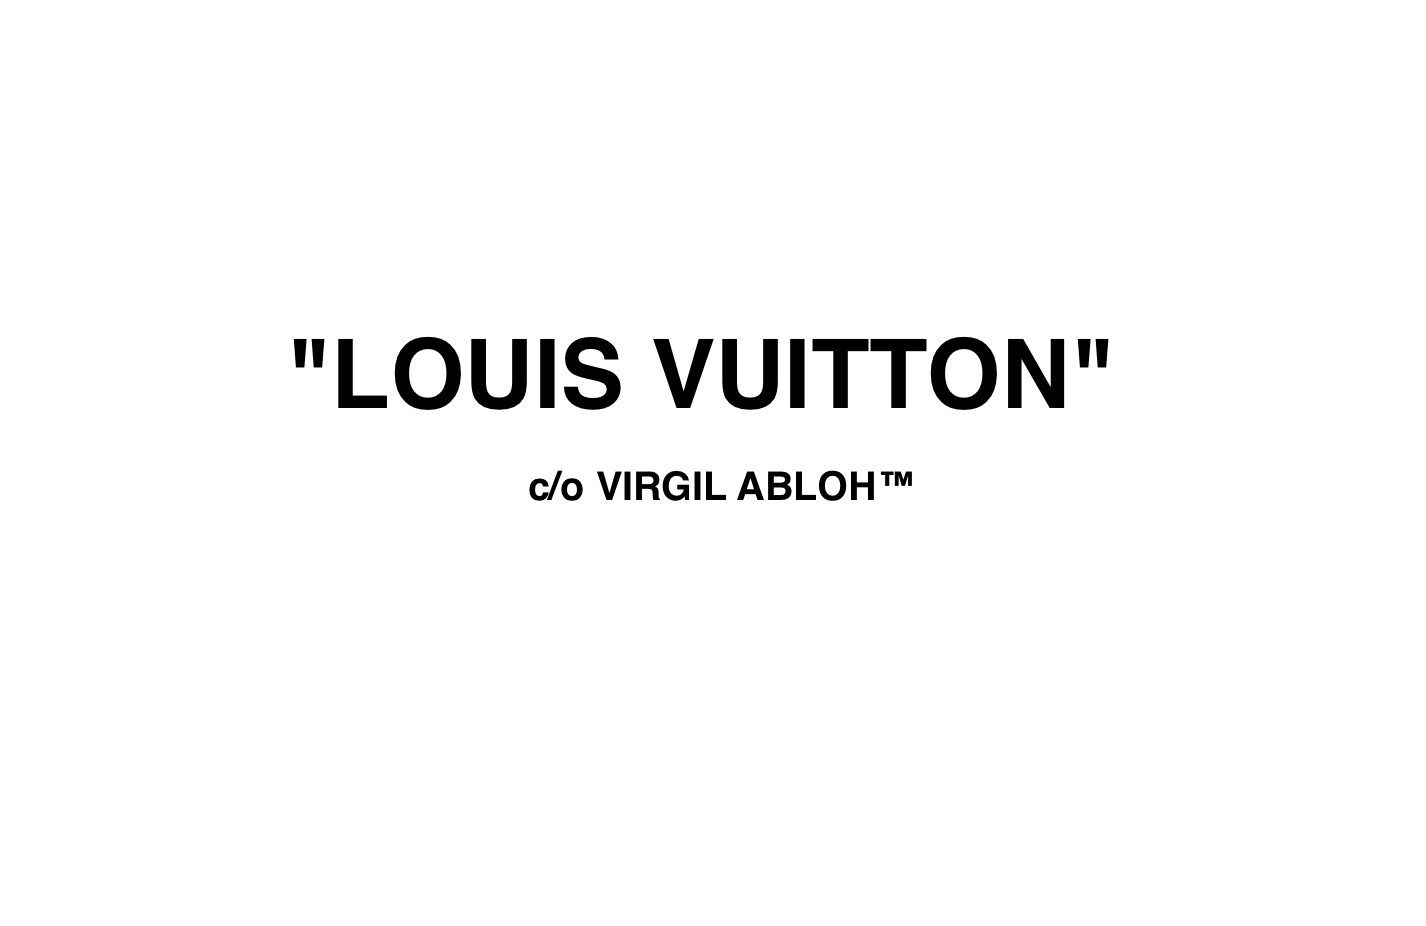 LOUIS VUITTON VIRGIL ABLOH 100% silk navy white typography logo